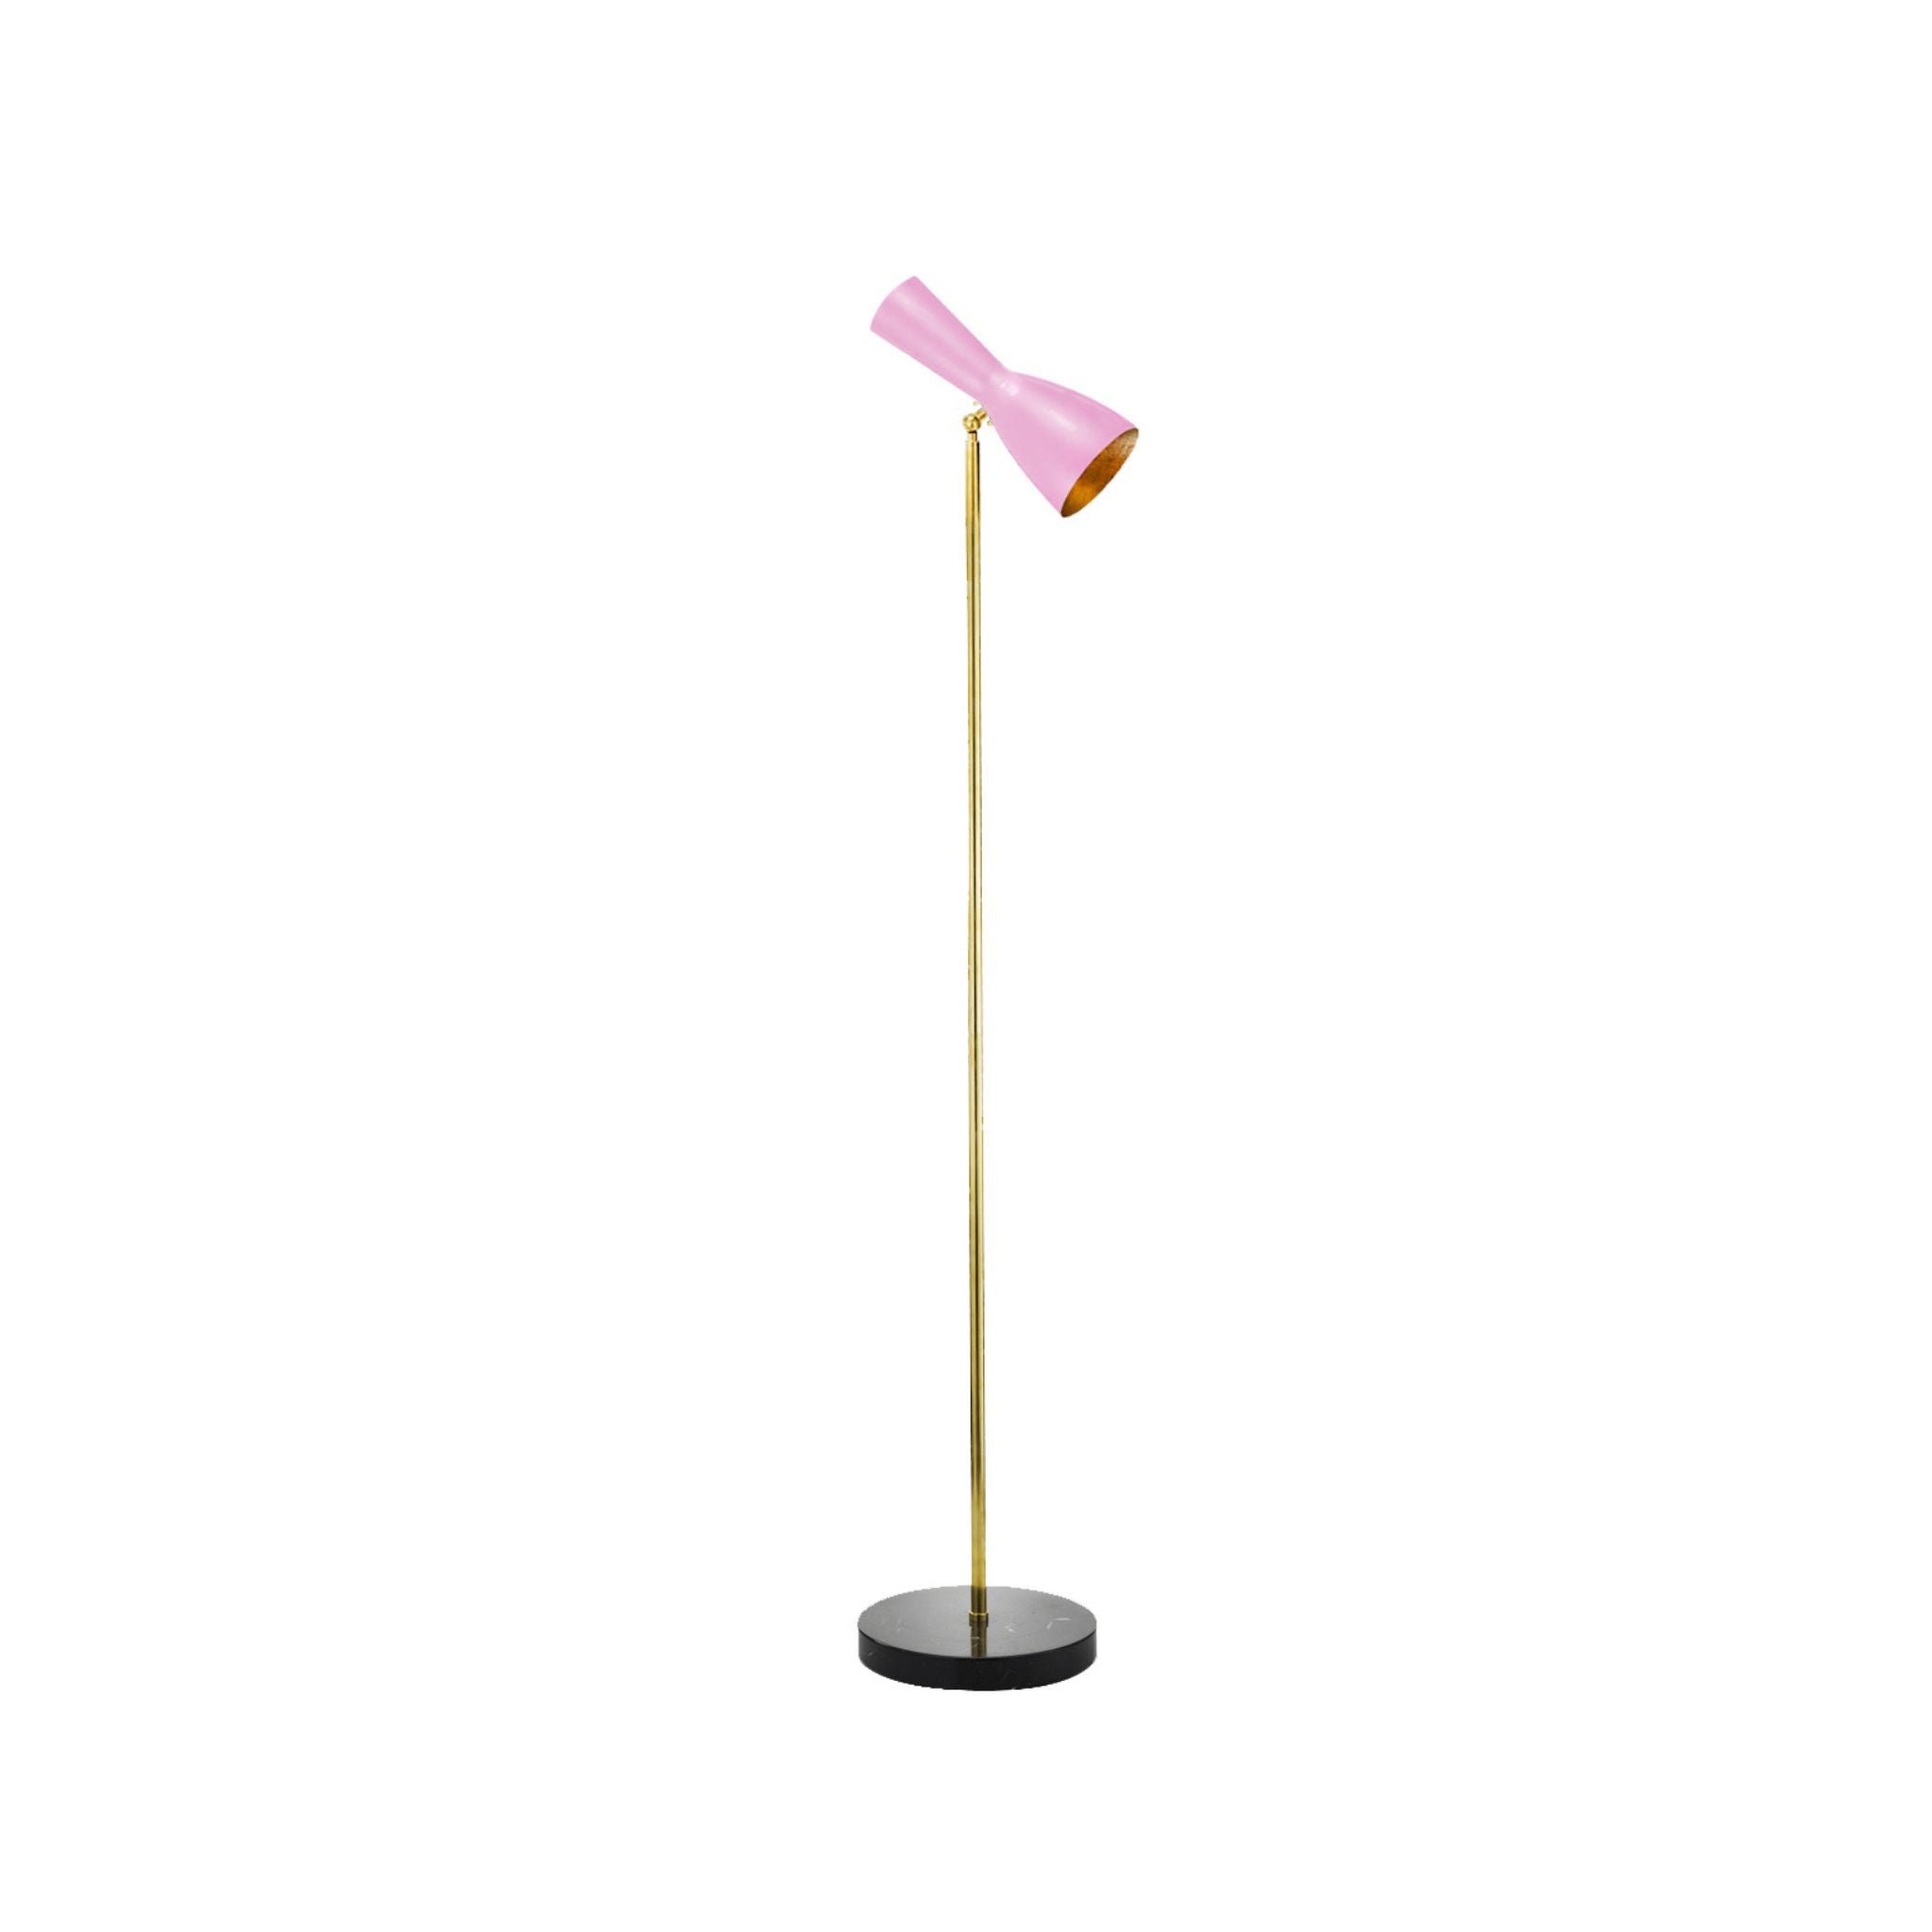 Lampada da terra a stelo Wormhole in ottone con paralume rosa - ilbronzetto